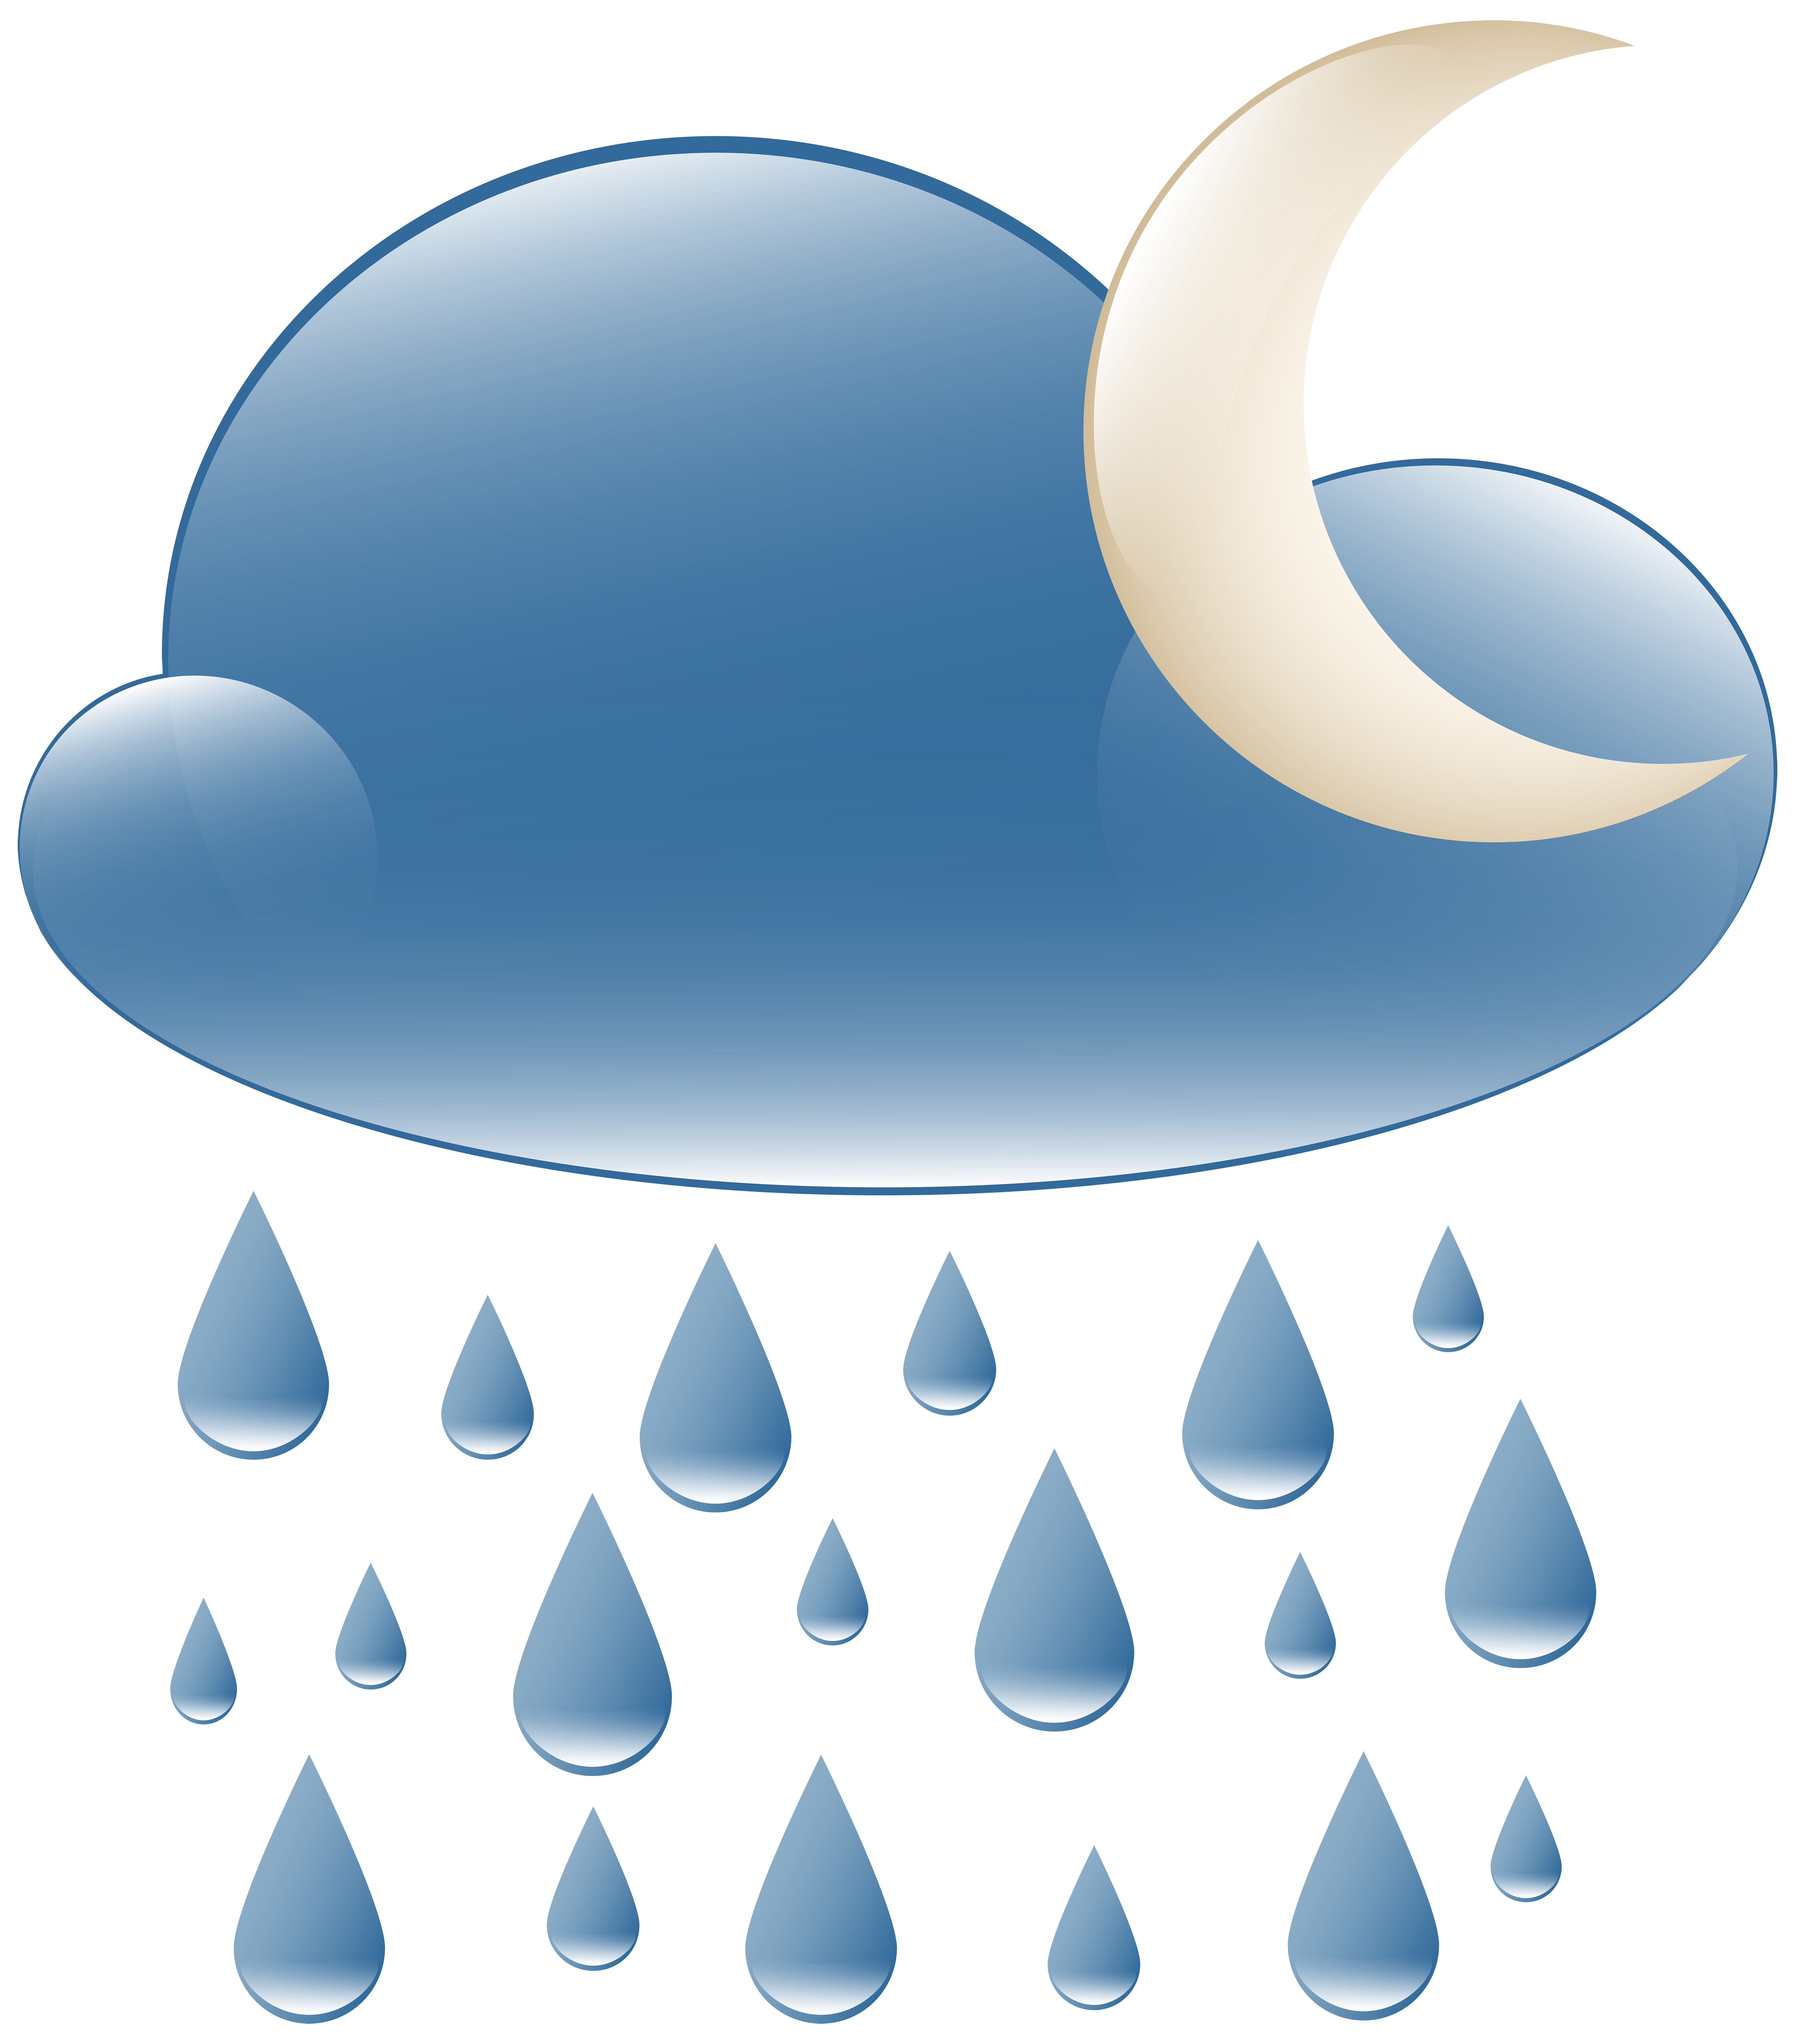 Rainy night weather icon. Clipart rain rainny